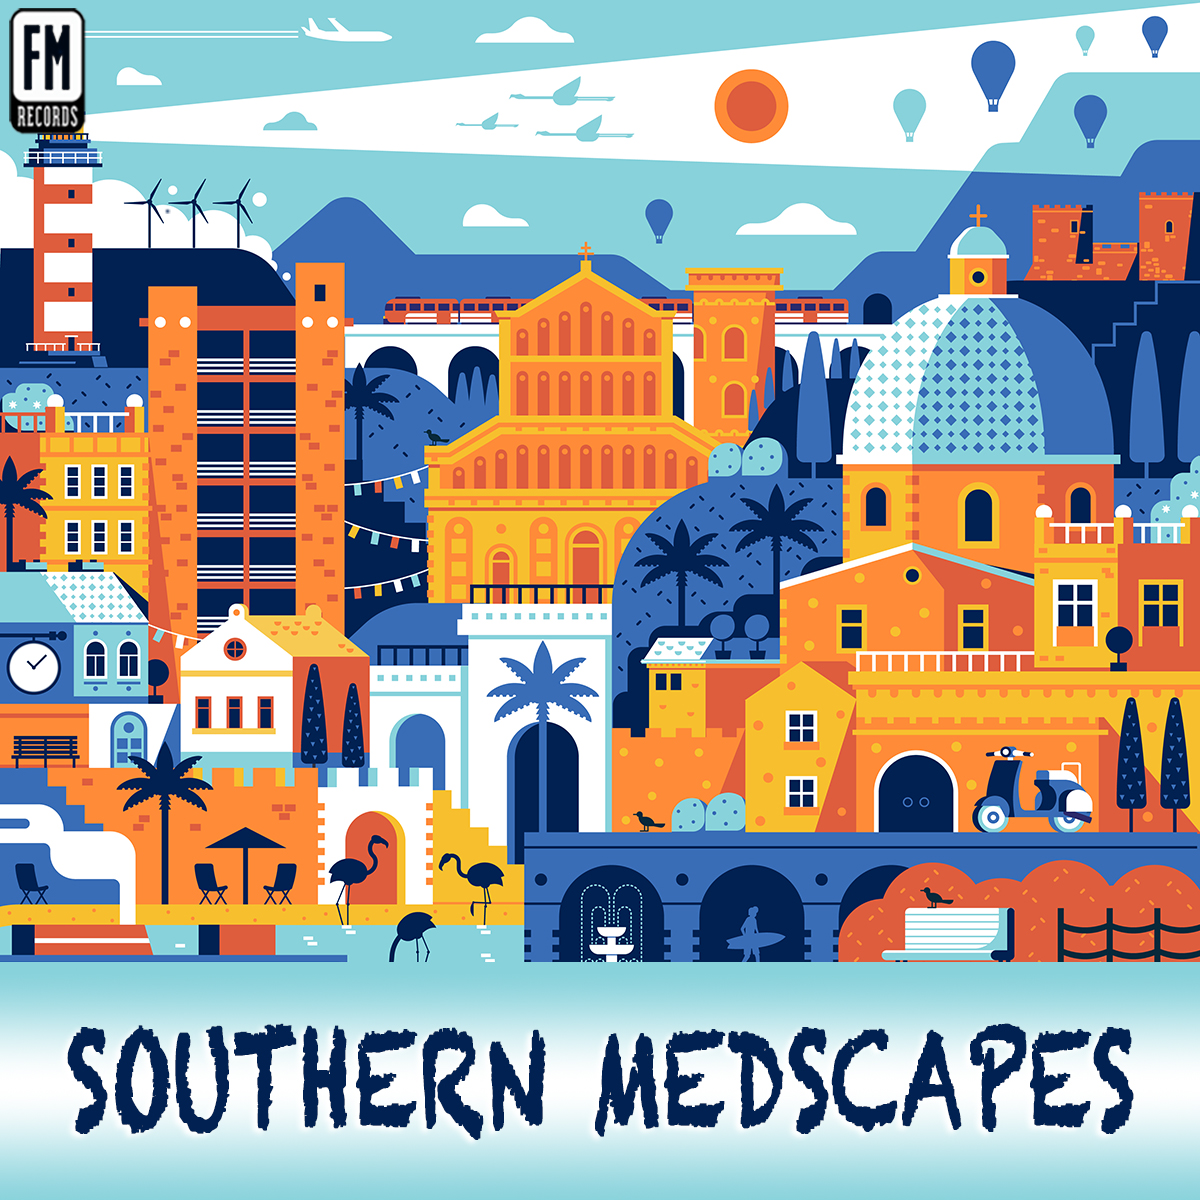 Southern Medscapes